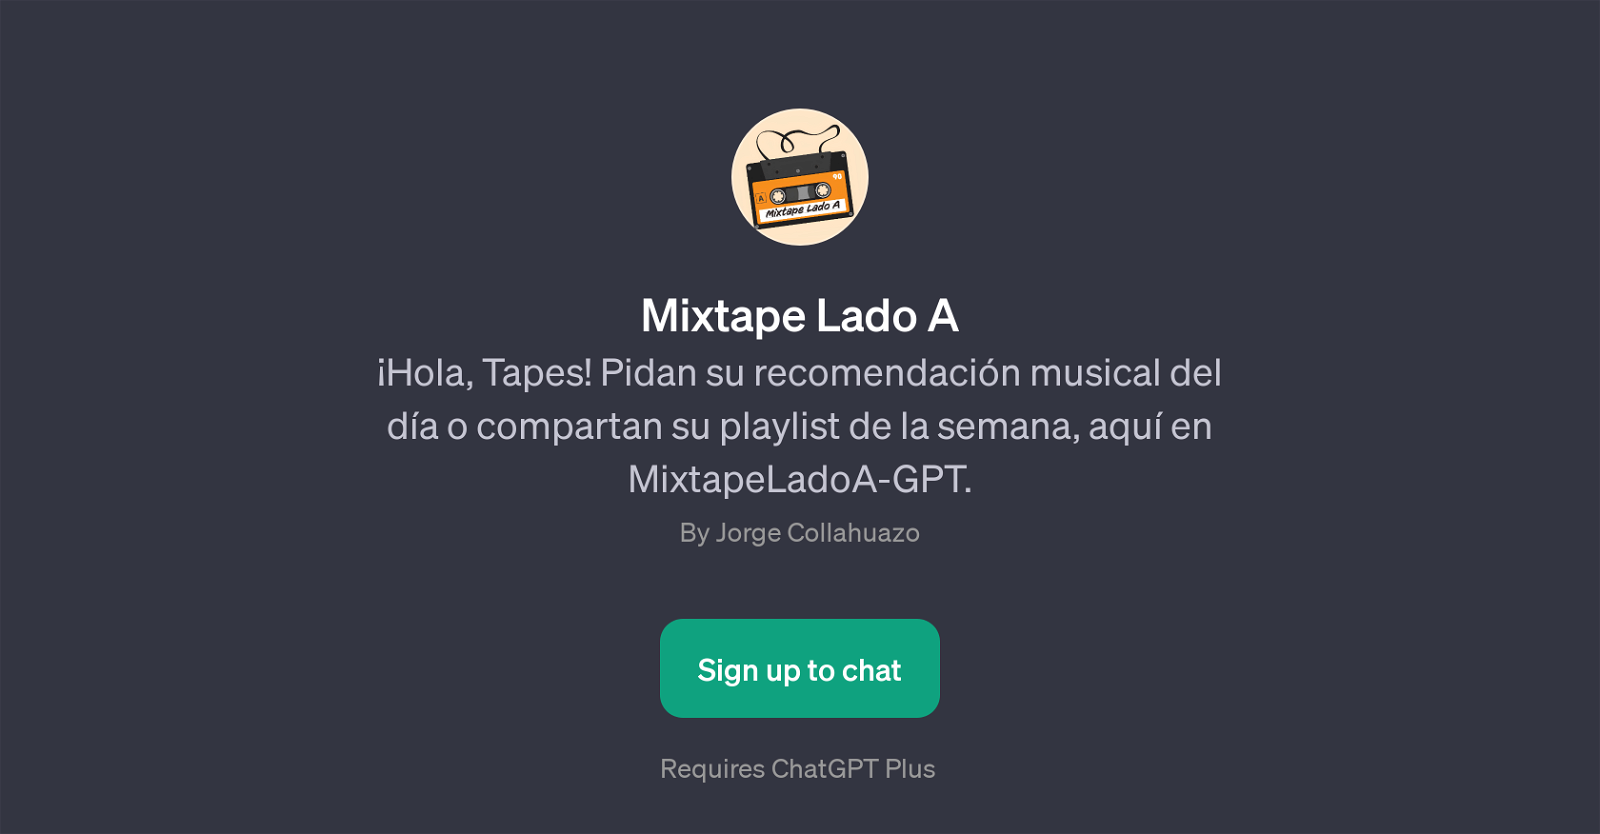 Mixtape Lado A website